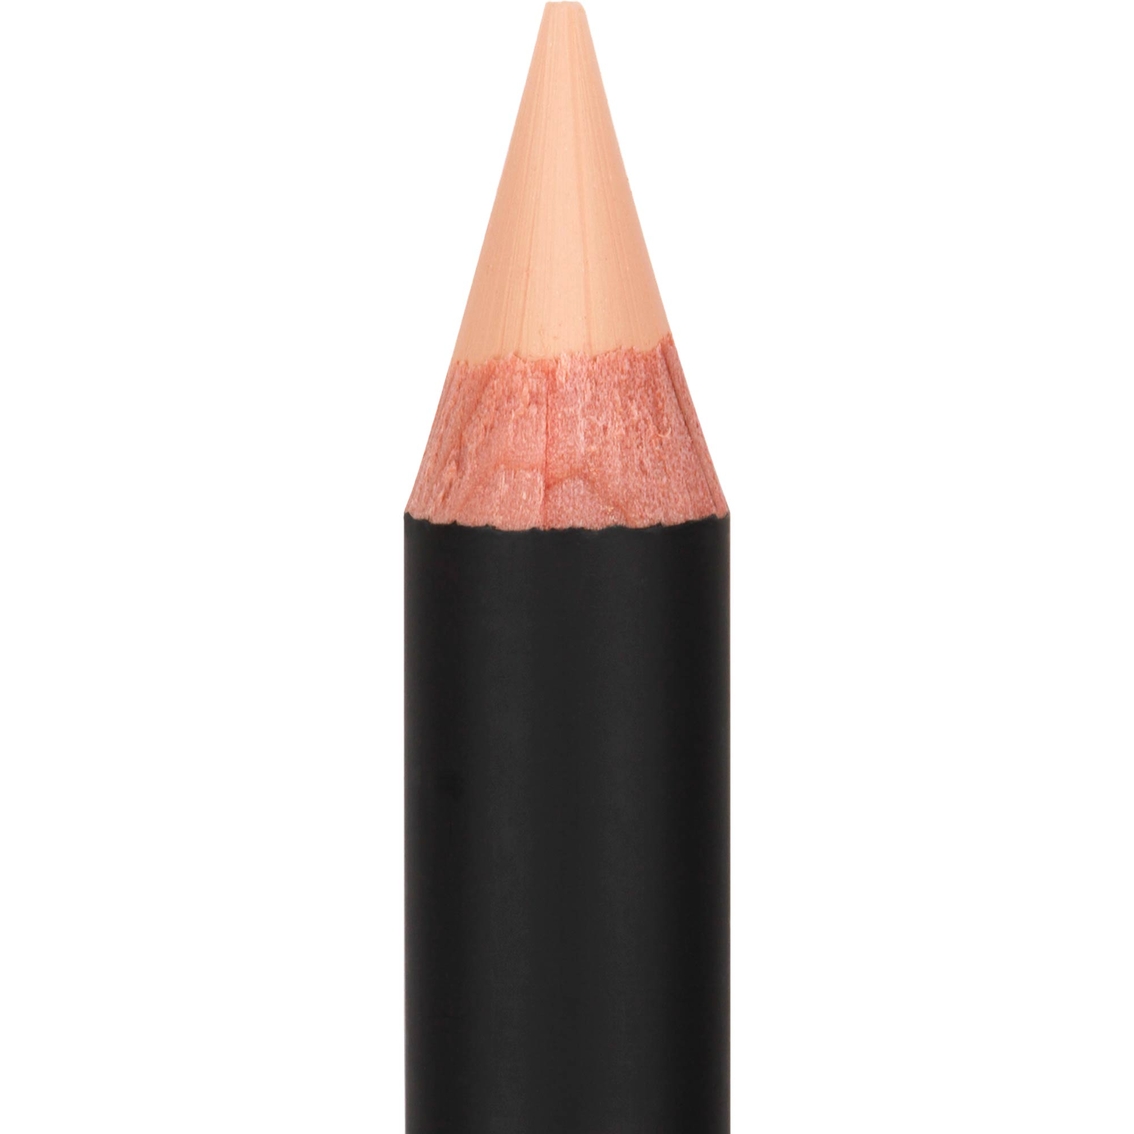 Anastasia Beverly Hills Pro Pencil - Image 2 of 3